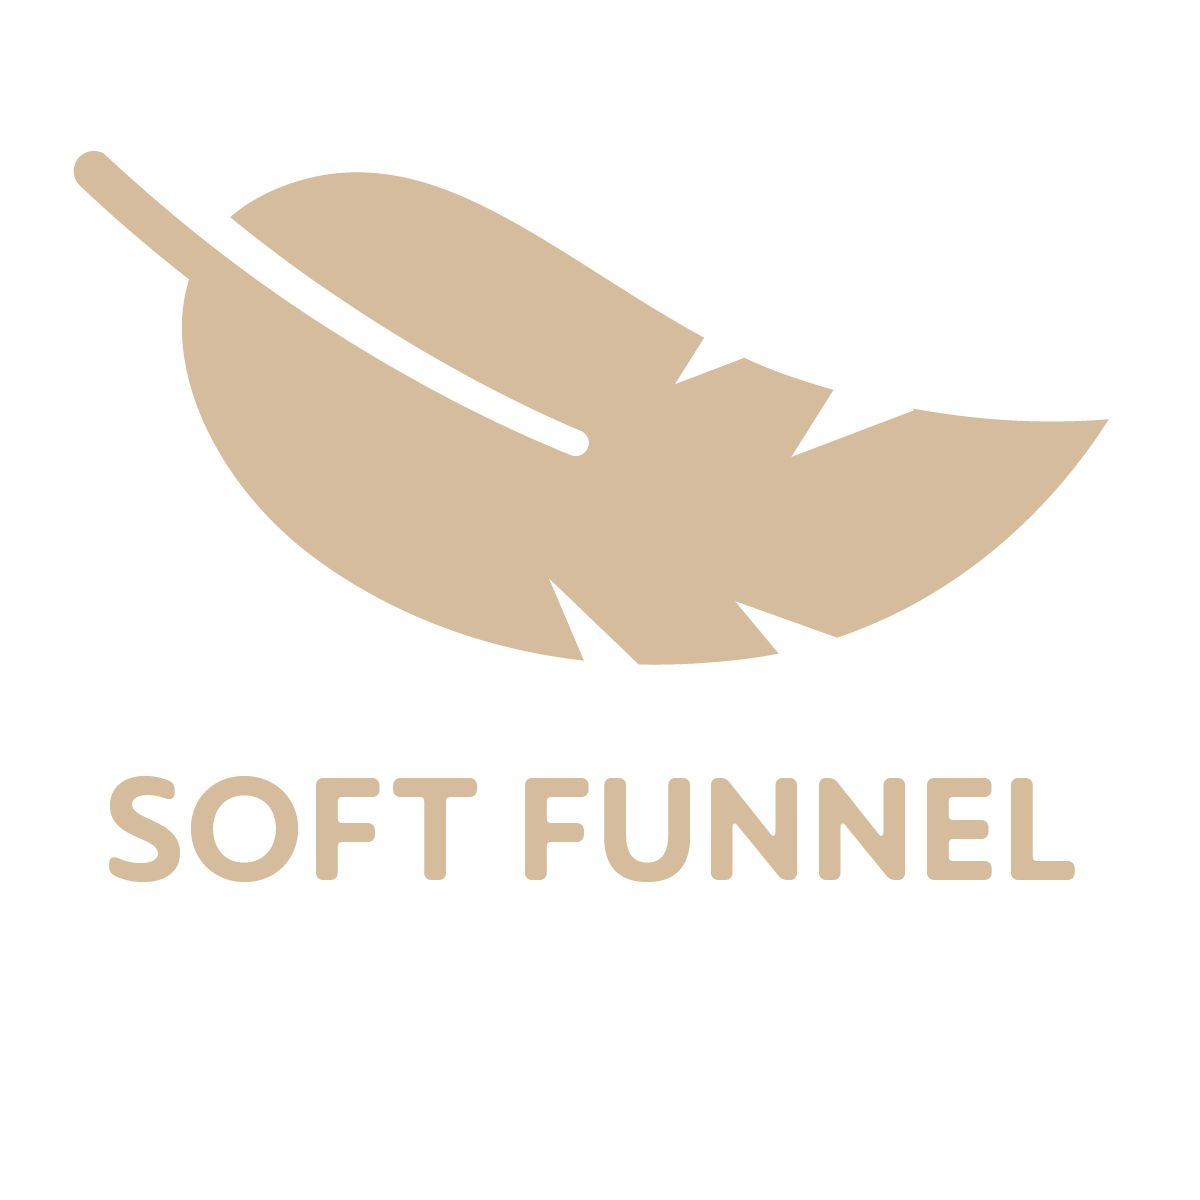 The soft funnel allows maximum comfort